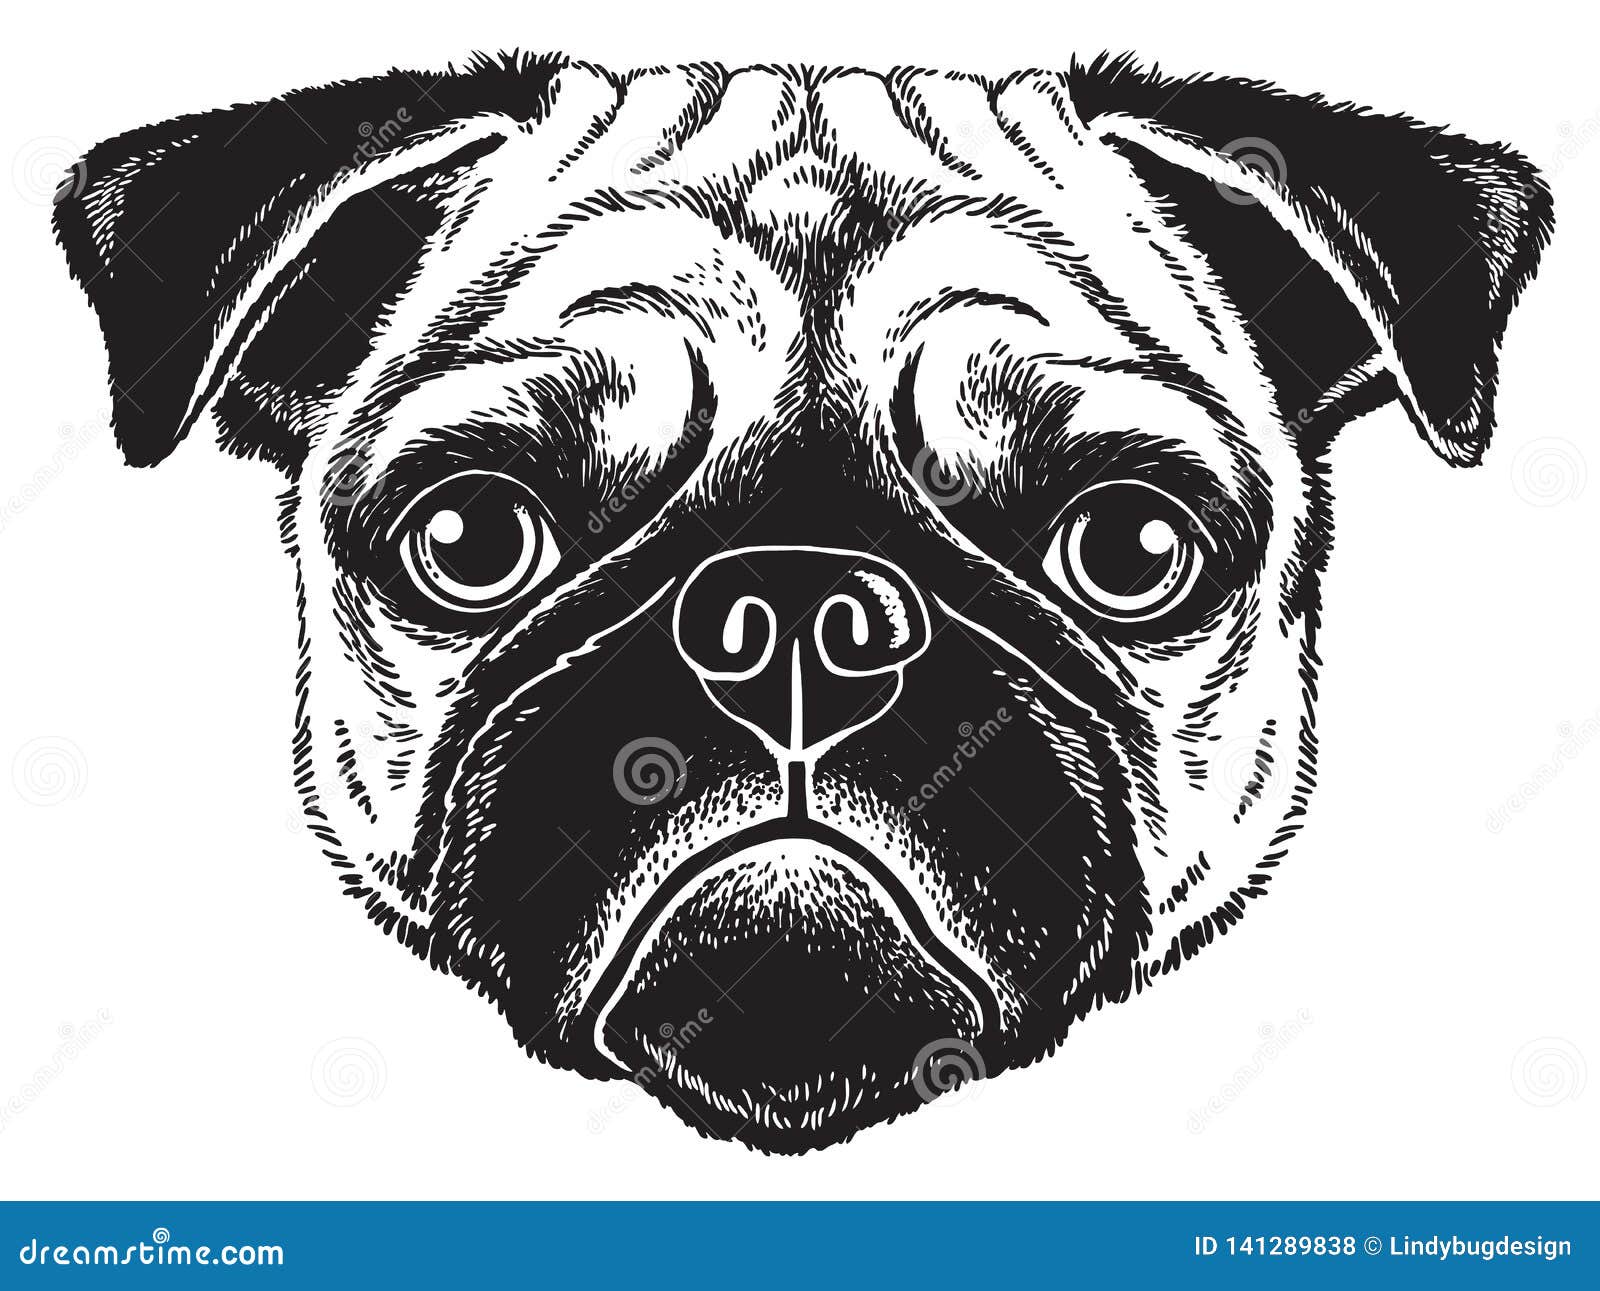 Portrait Sketch Of A Pug Dogs Face Stock Illustration